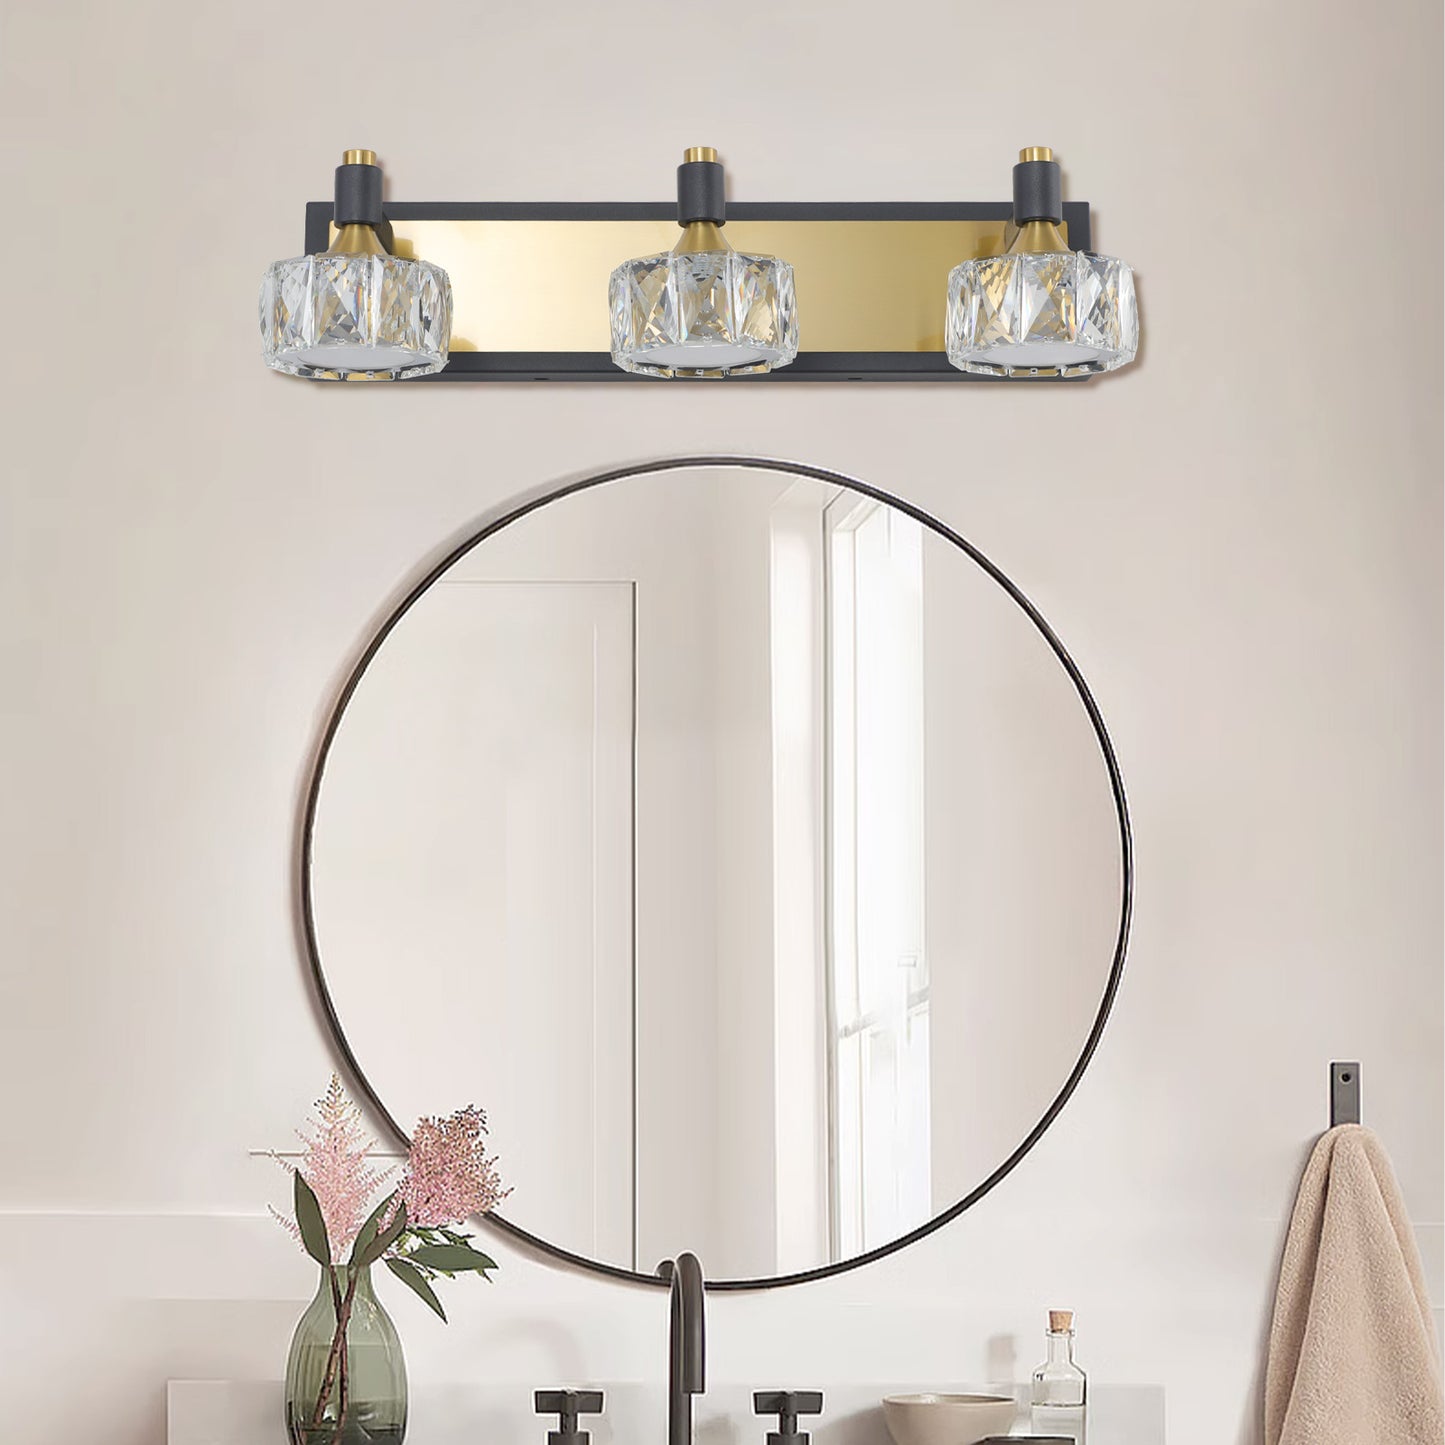 LED 3-Light Modern Crystal Bathroom Vanity Light Over Mirror Bath Wall Lighting Fixtures